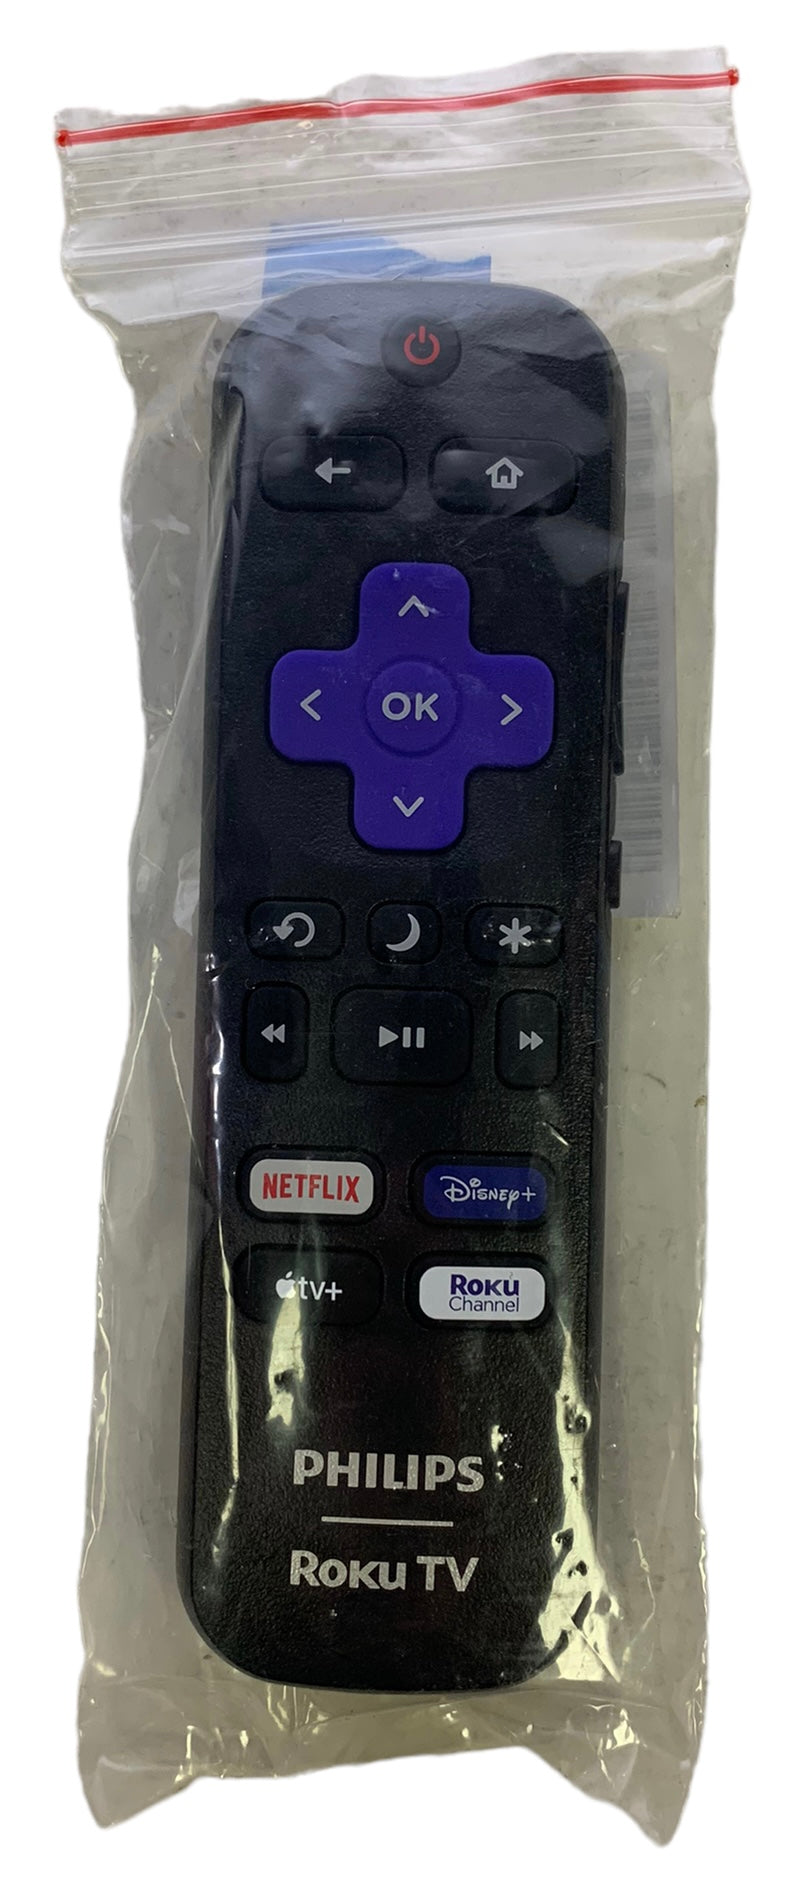 Philips 3226001024 Roku Remote Control -- Open Bag Netflix Disney+ Apple TV Roku